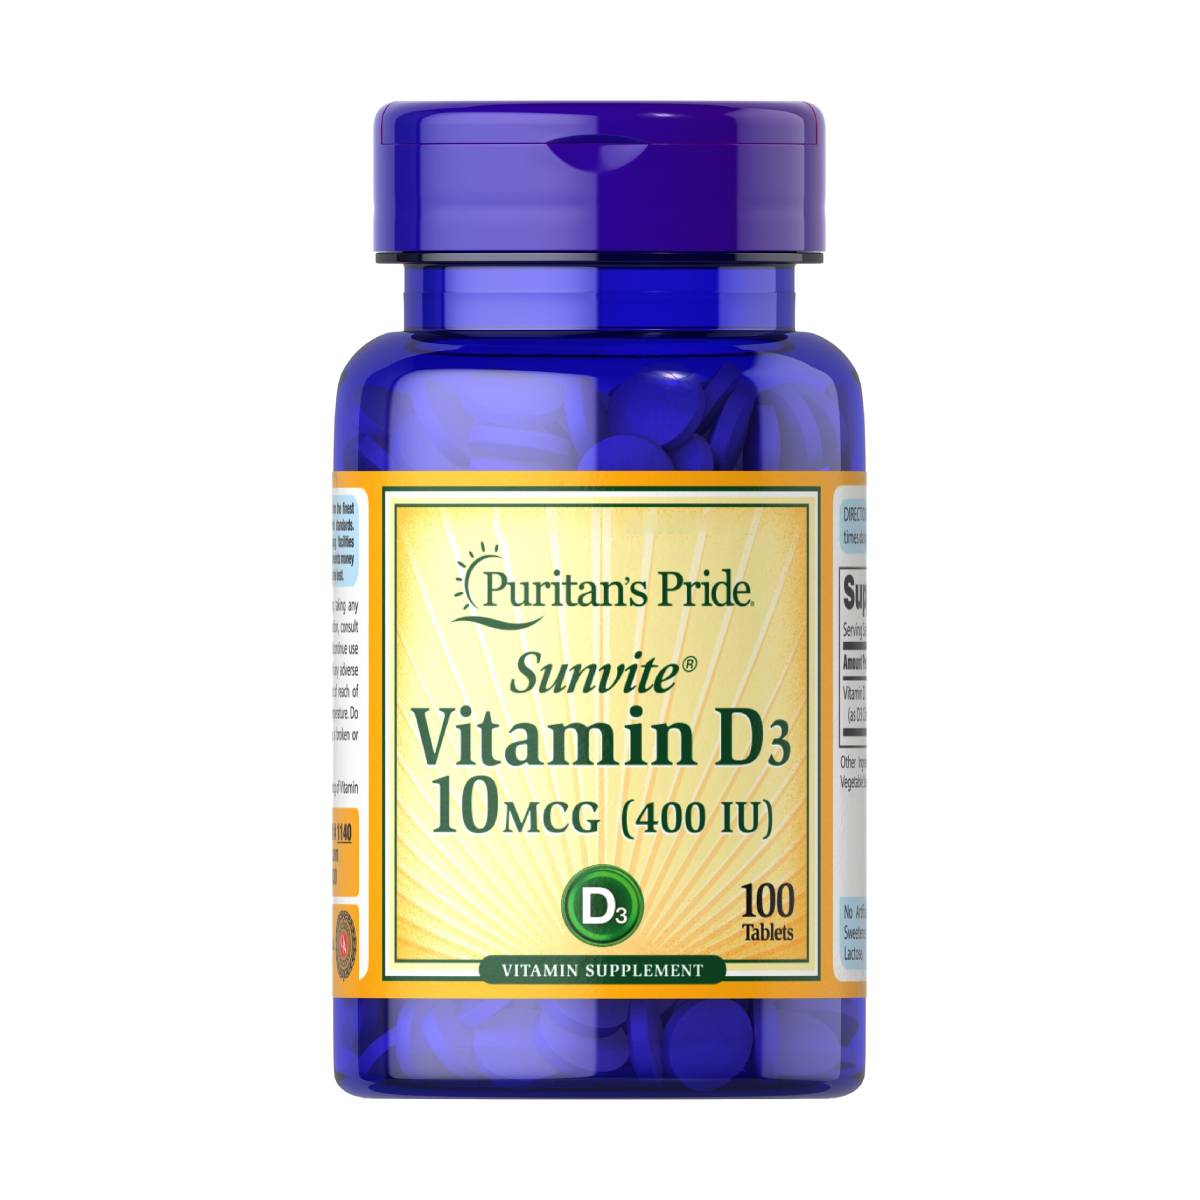 Puritan's Pride, Vitamin D3 10 mcg (400 IU)